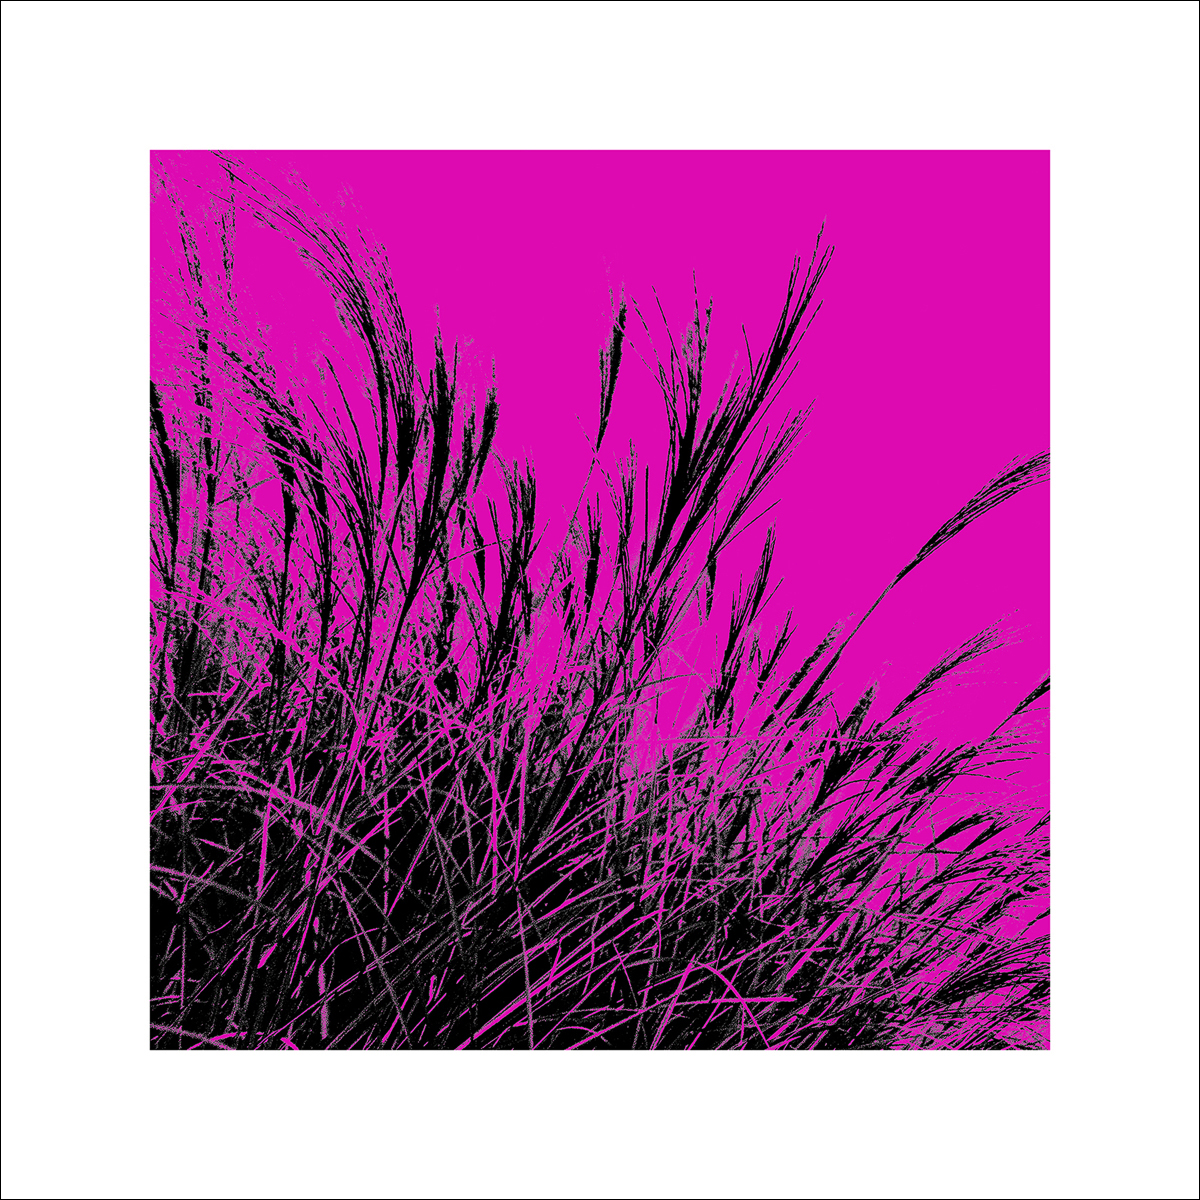 Polla, D.: Grass (magenta), 2011 ZG